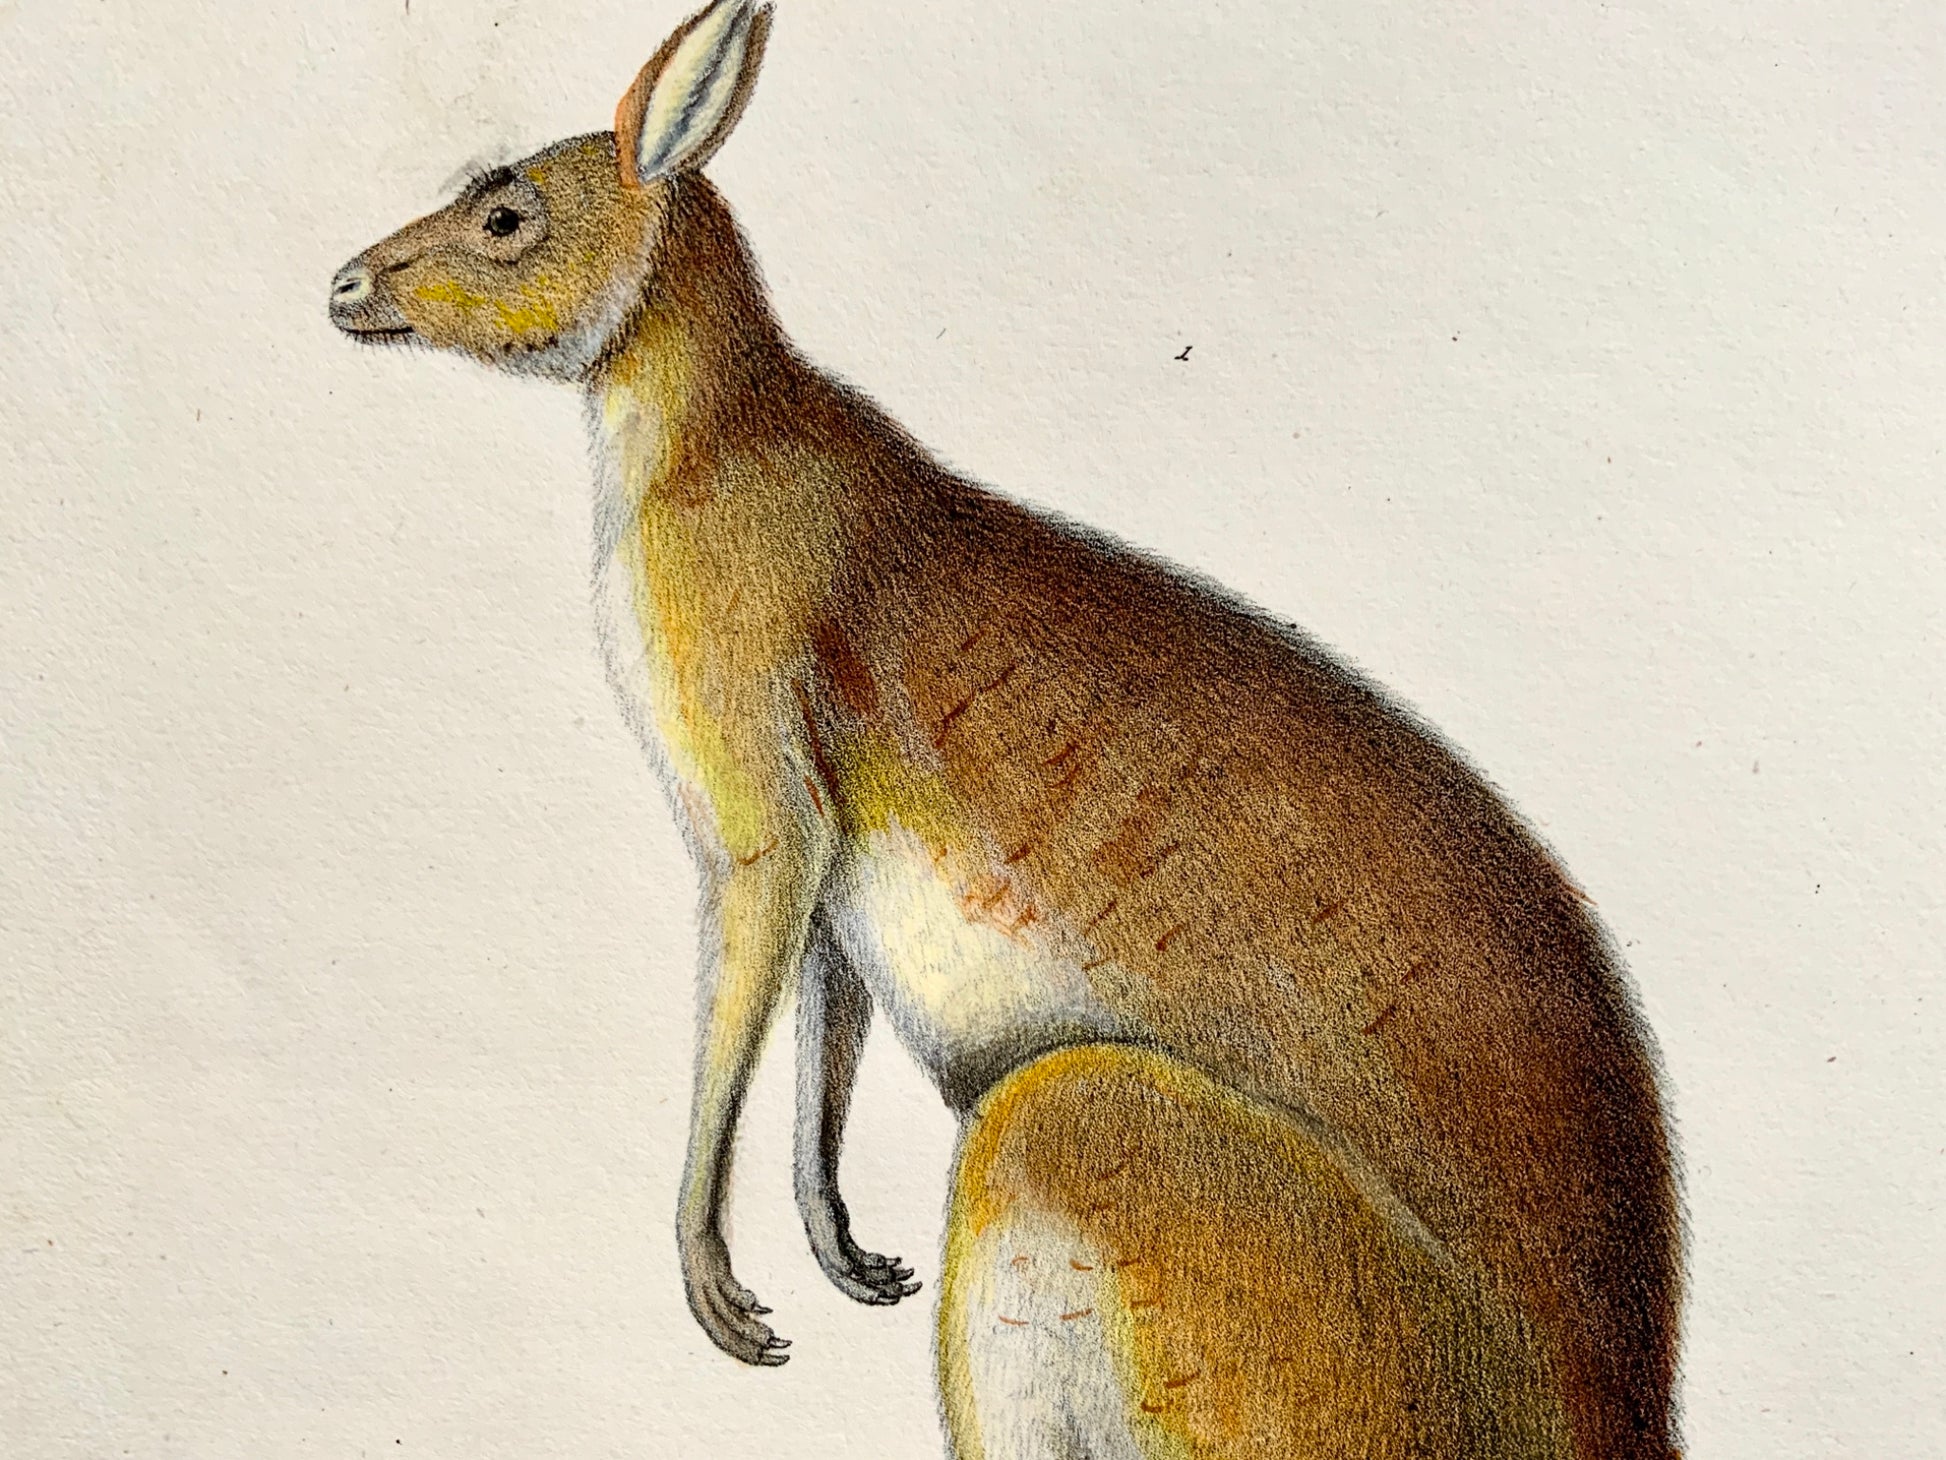 1824 Kangaroo Phalanger - Mammal - K.J. Brodtmann hand colored FOLIO lithograph